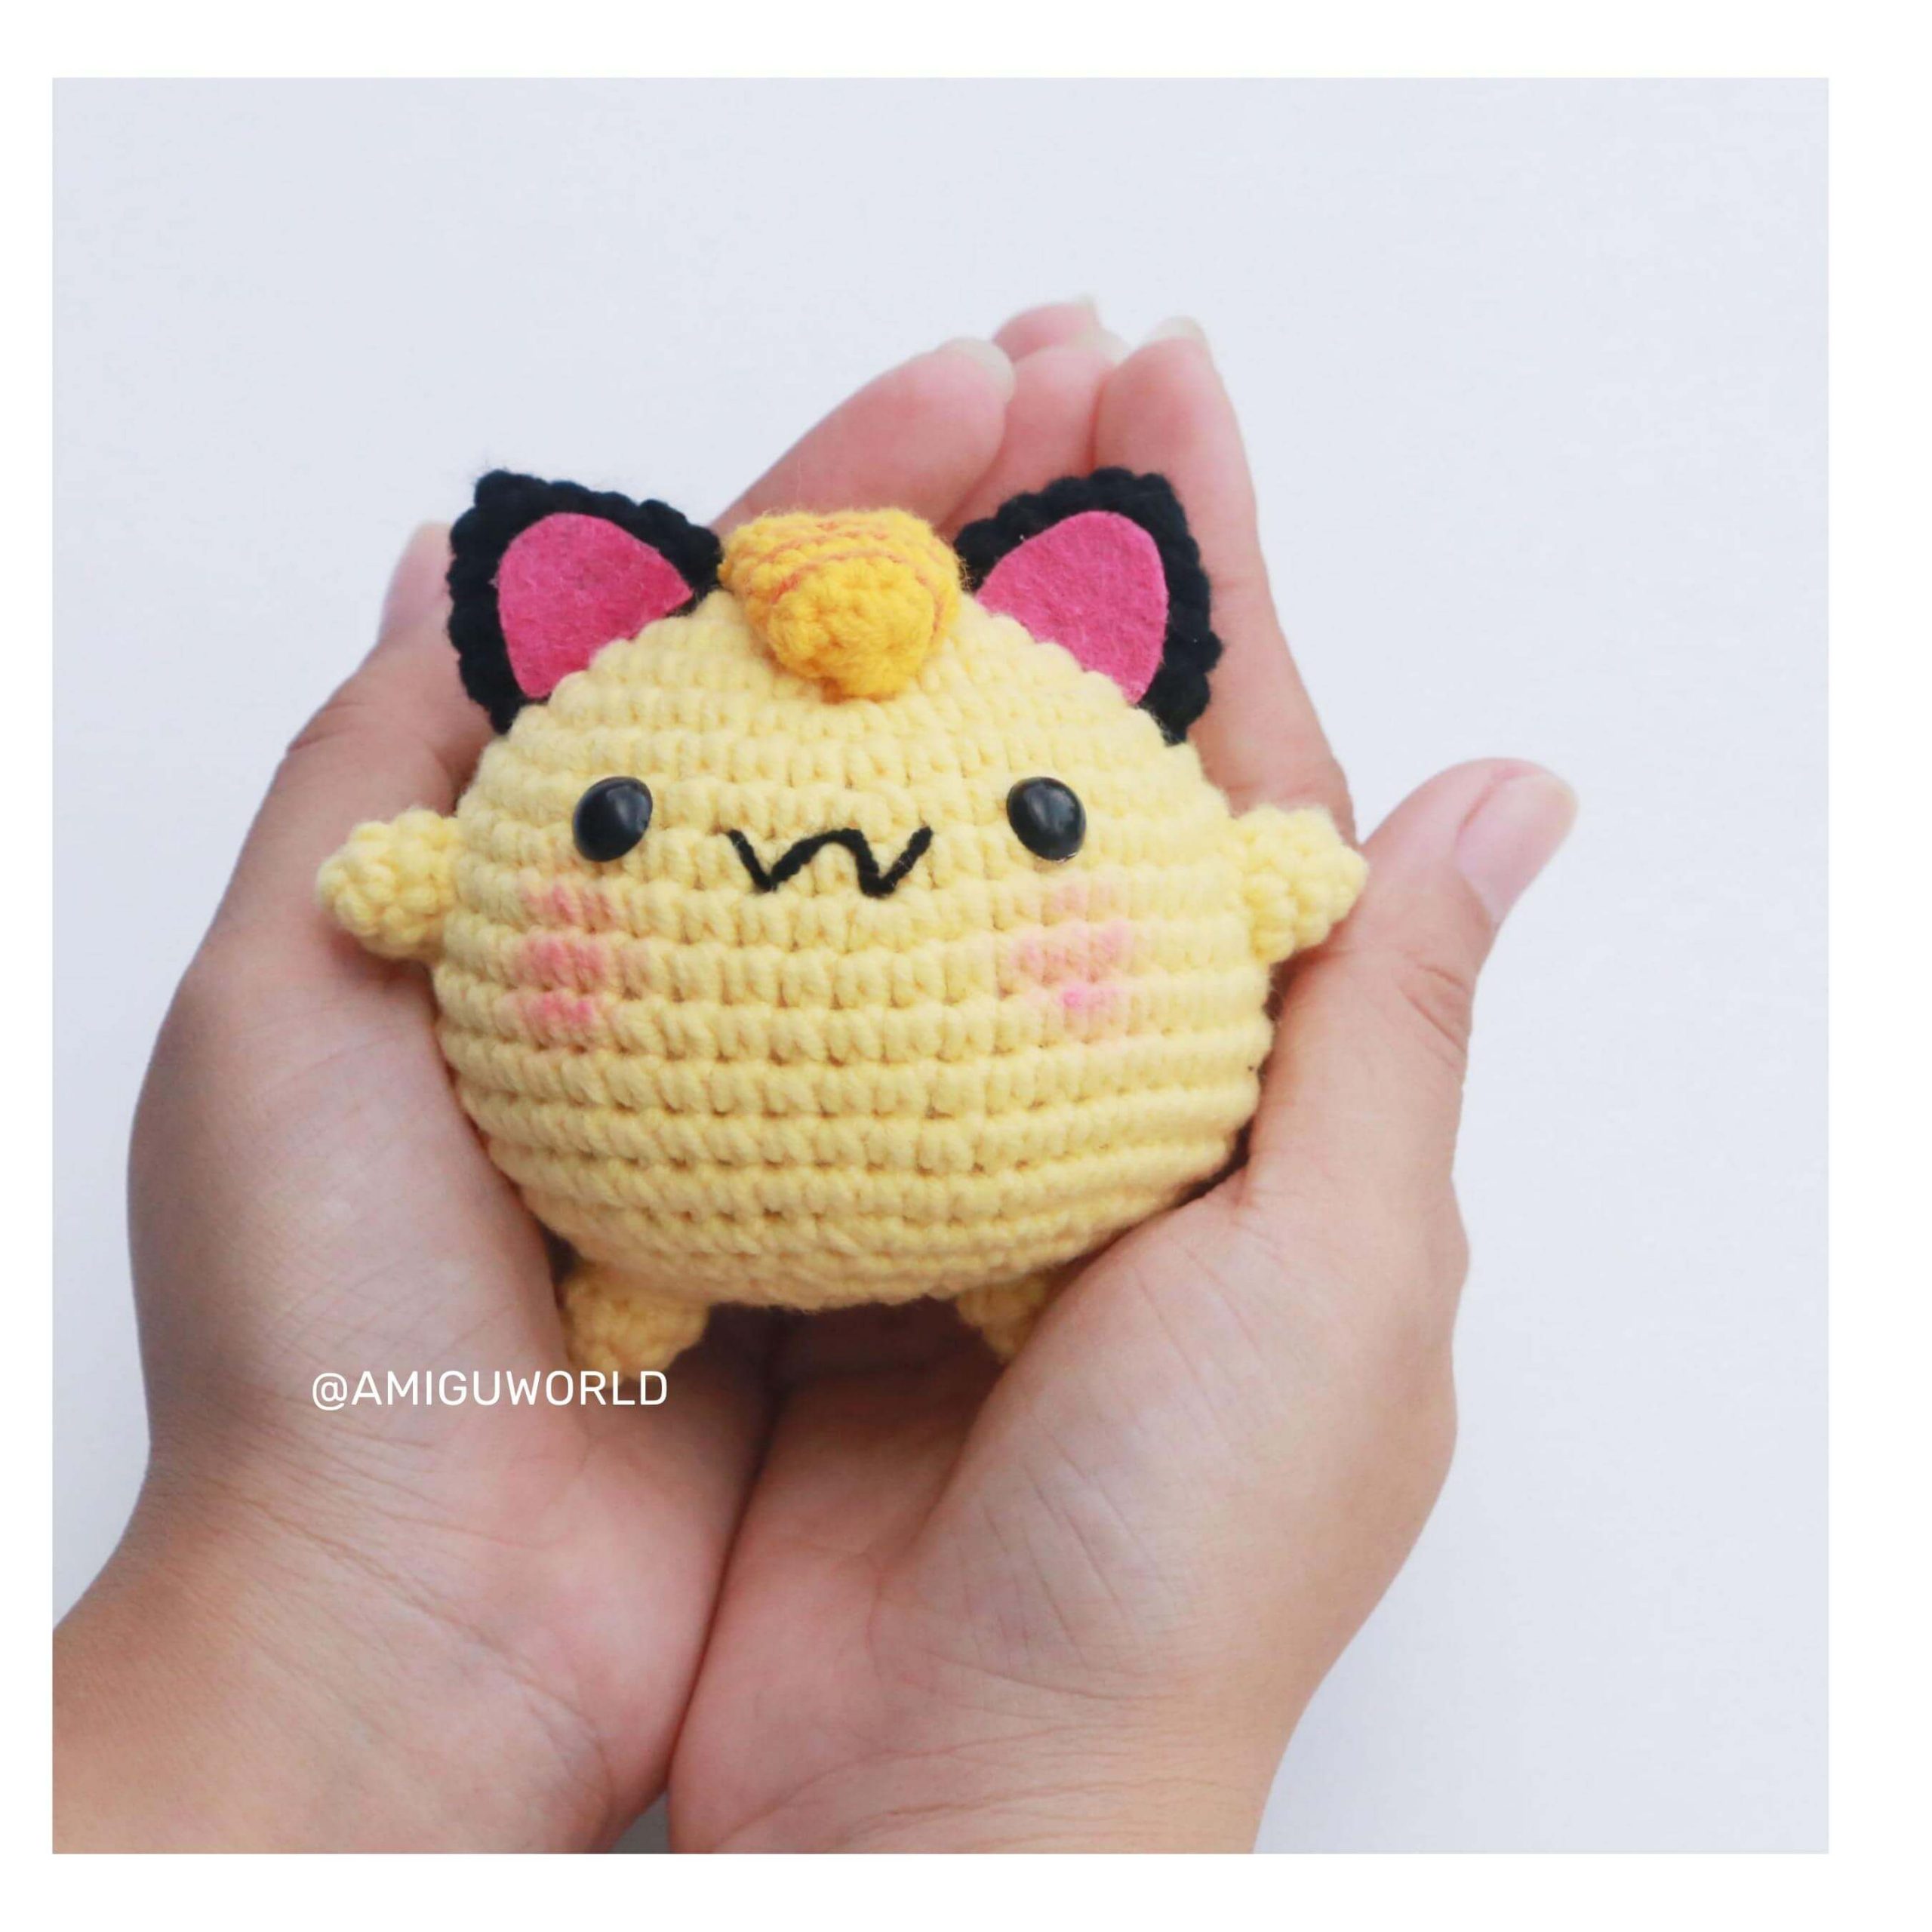 Meowth-amigurumi-crochet-pattern-by-AmiguWorld (5)